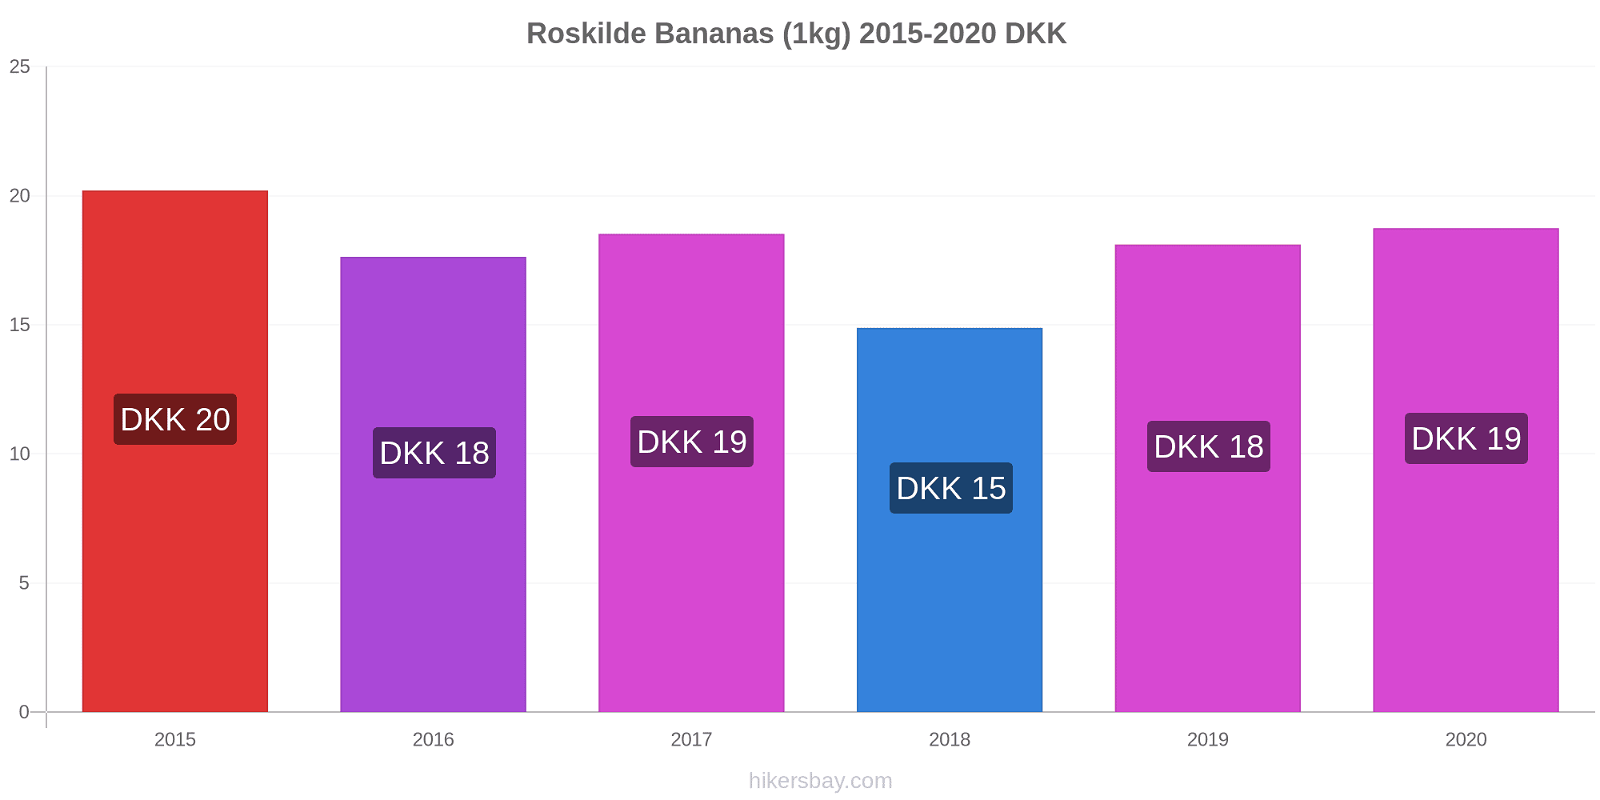 Roskilde price changes Bananas (1kg) hikersbay.com